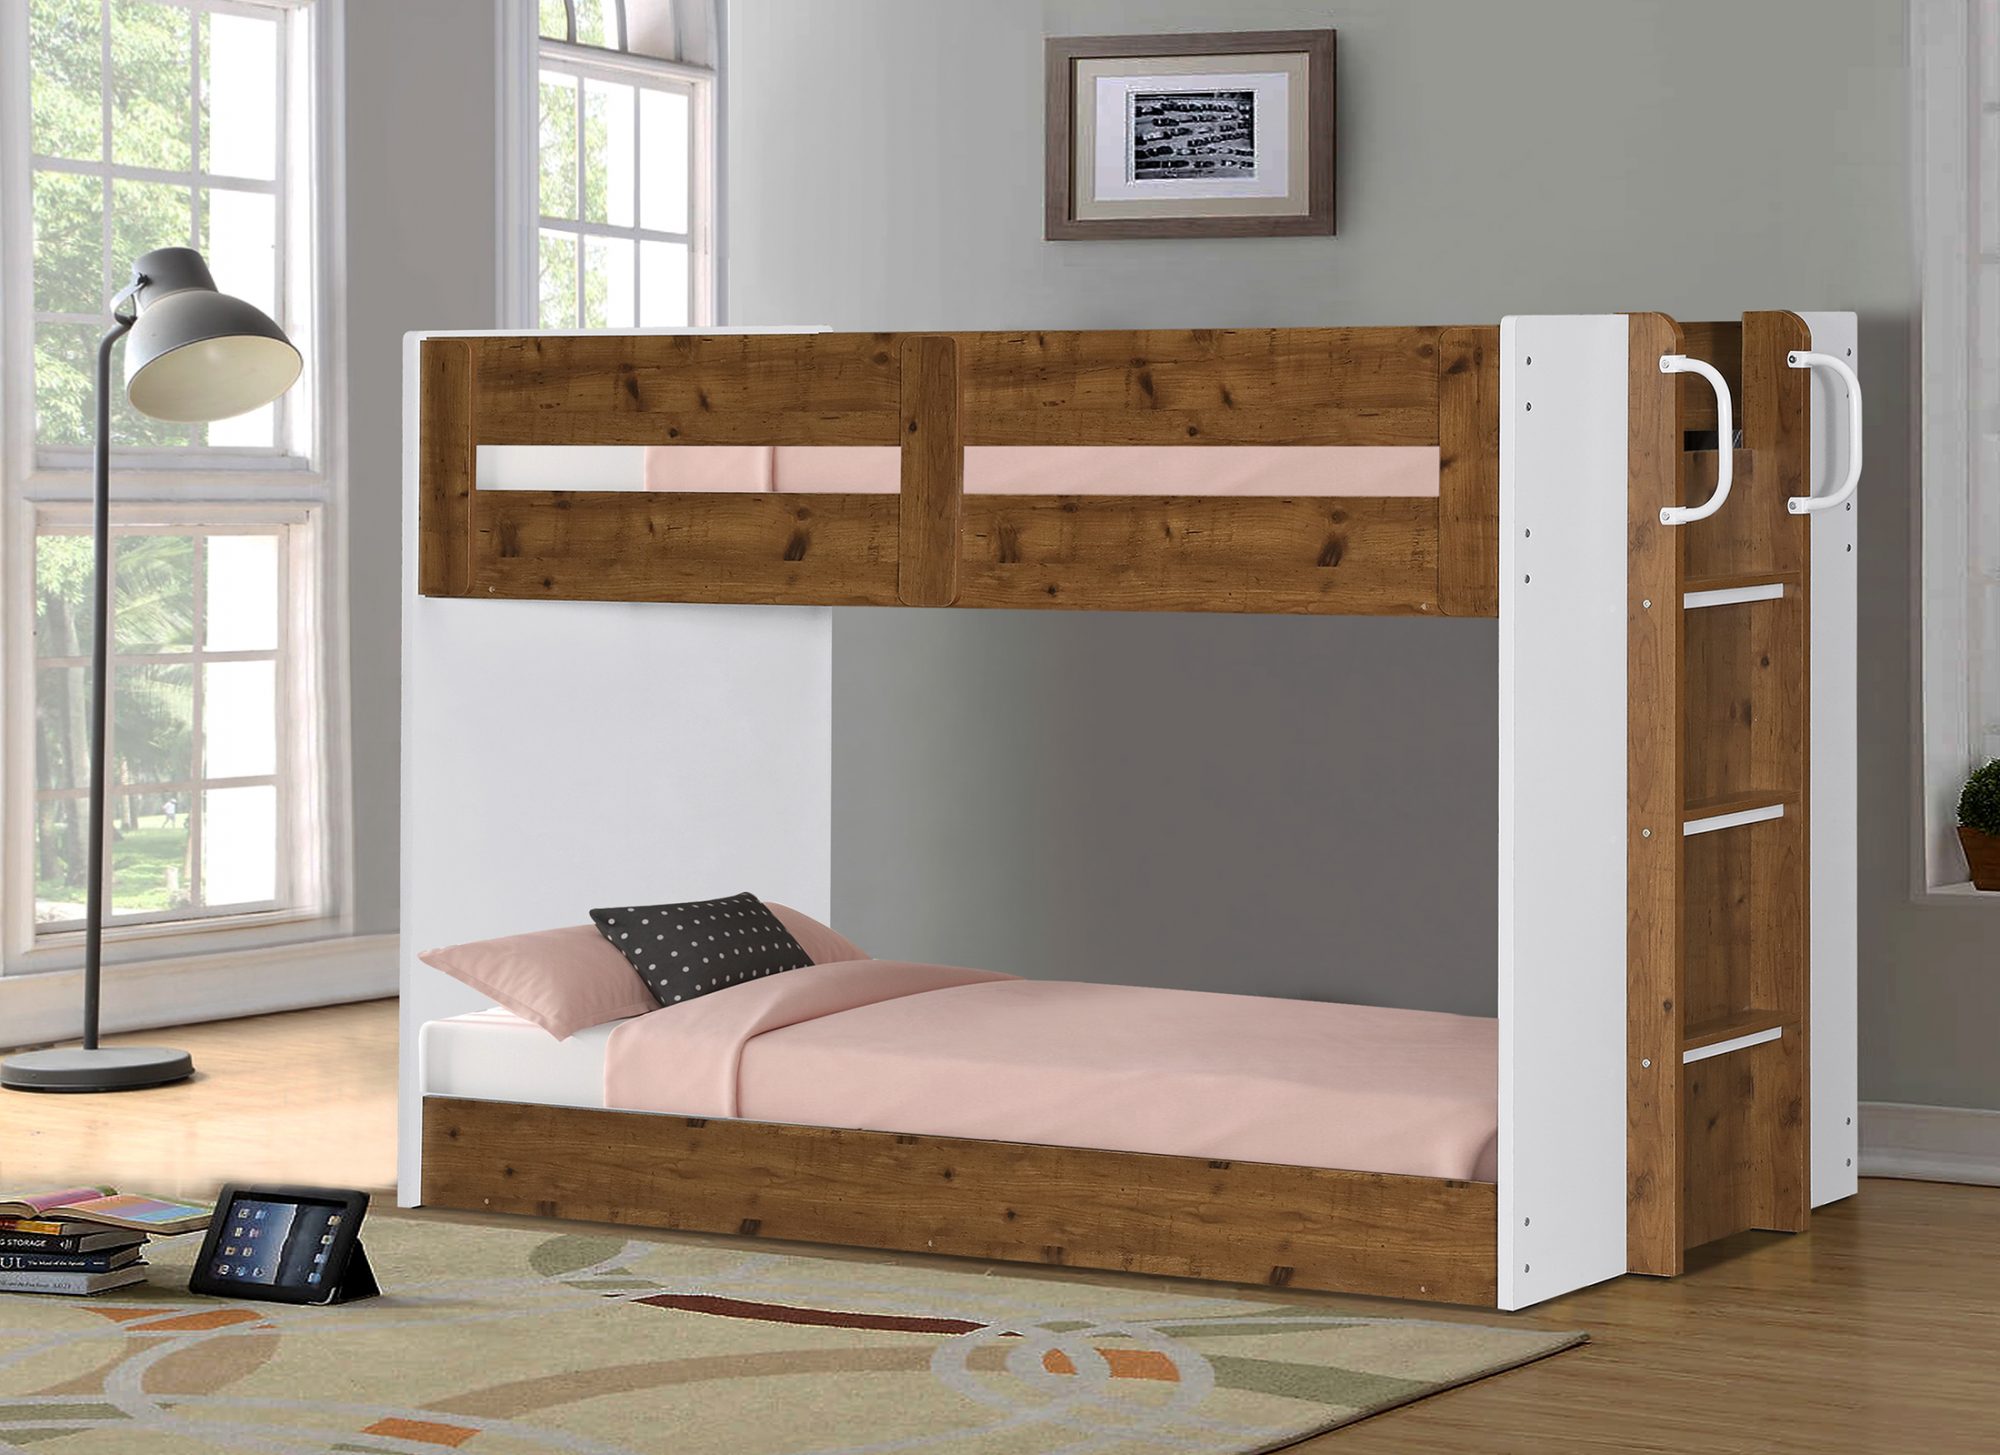 mid sleeper bunk beds